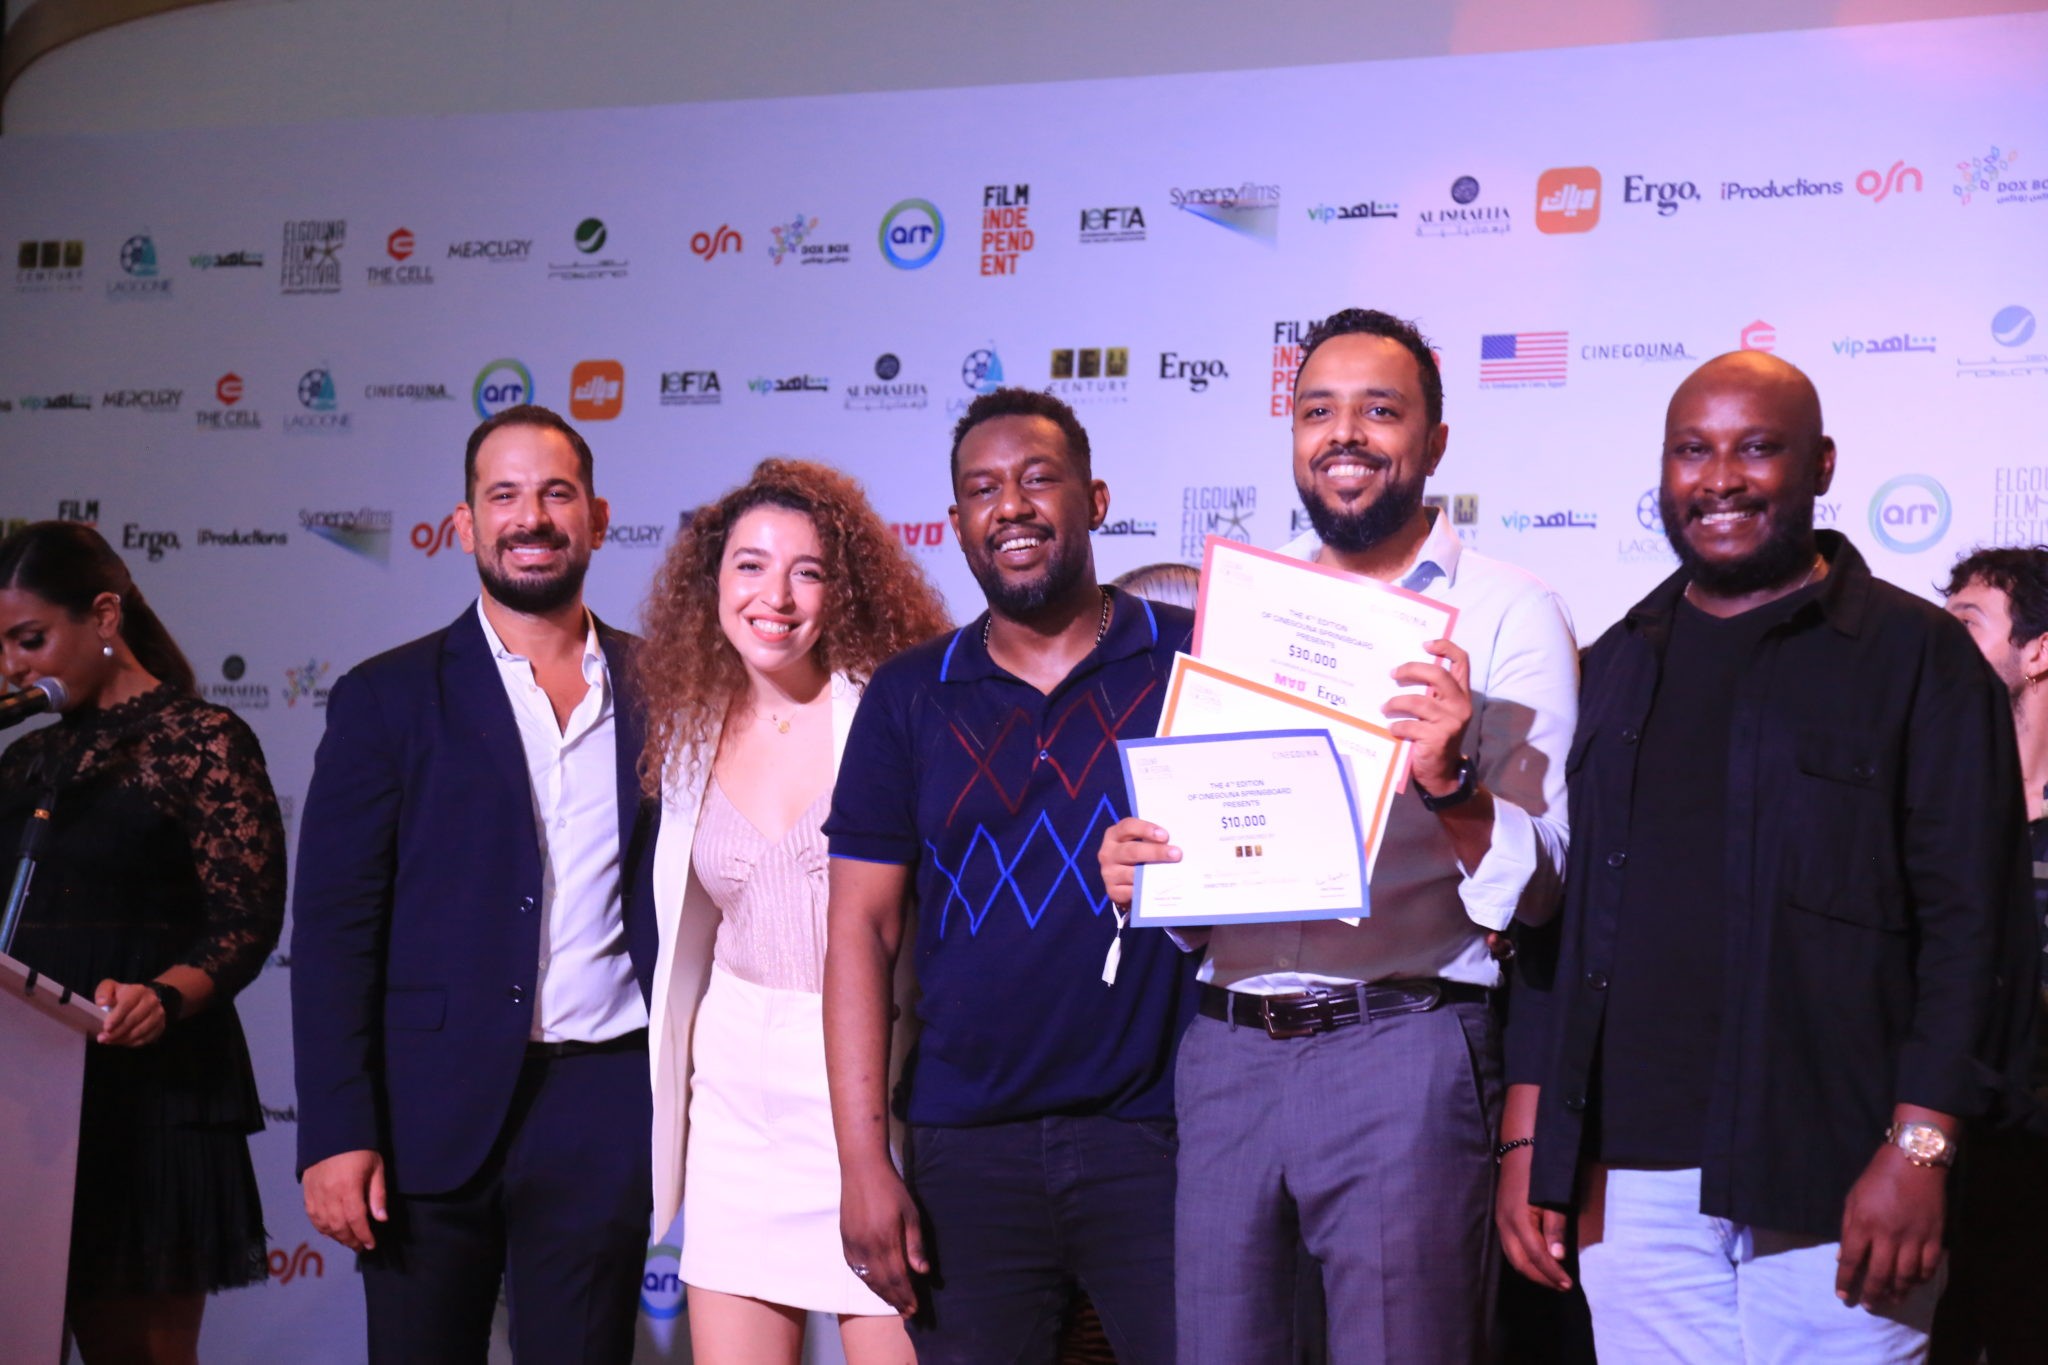 “Goodbye Julia” receives Ergo, Media Ventures’ Award at the 4th Gouna Film Festival